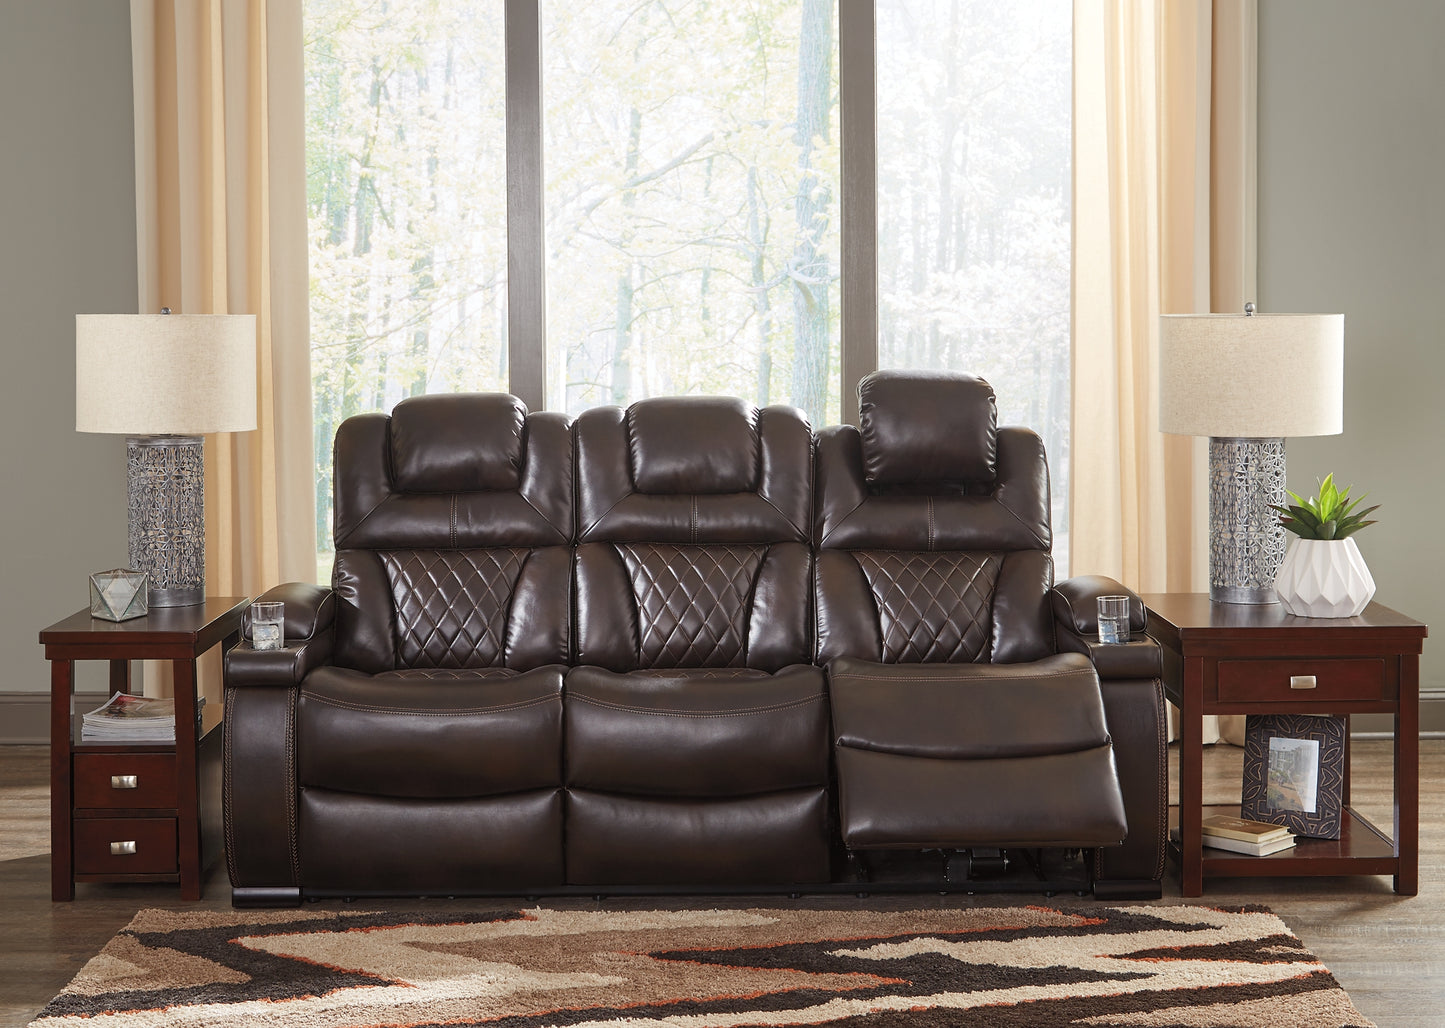 Warnerton PWR REC Sofa with ADJ Headrest JB's Furniture  Home Furniture, Home Decor, Furniture Store